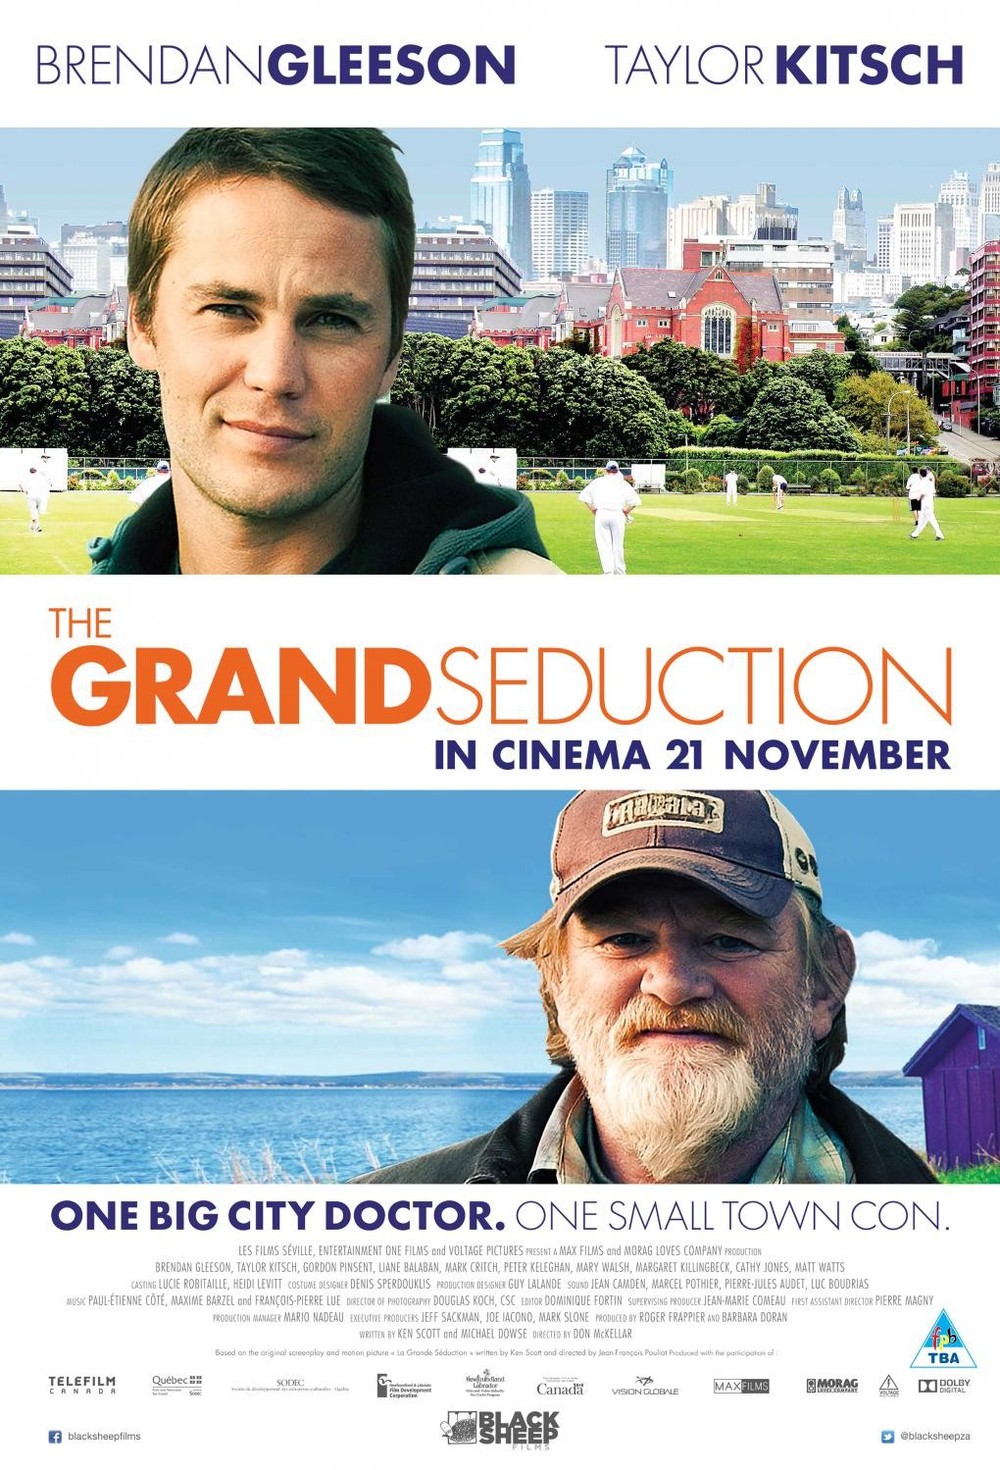 Seduction (2013)